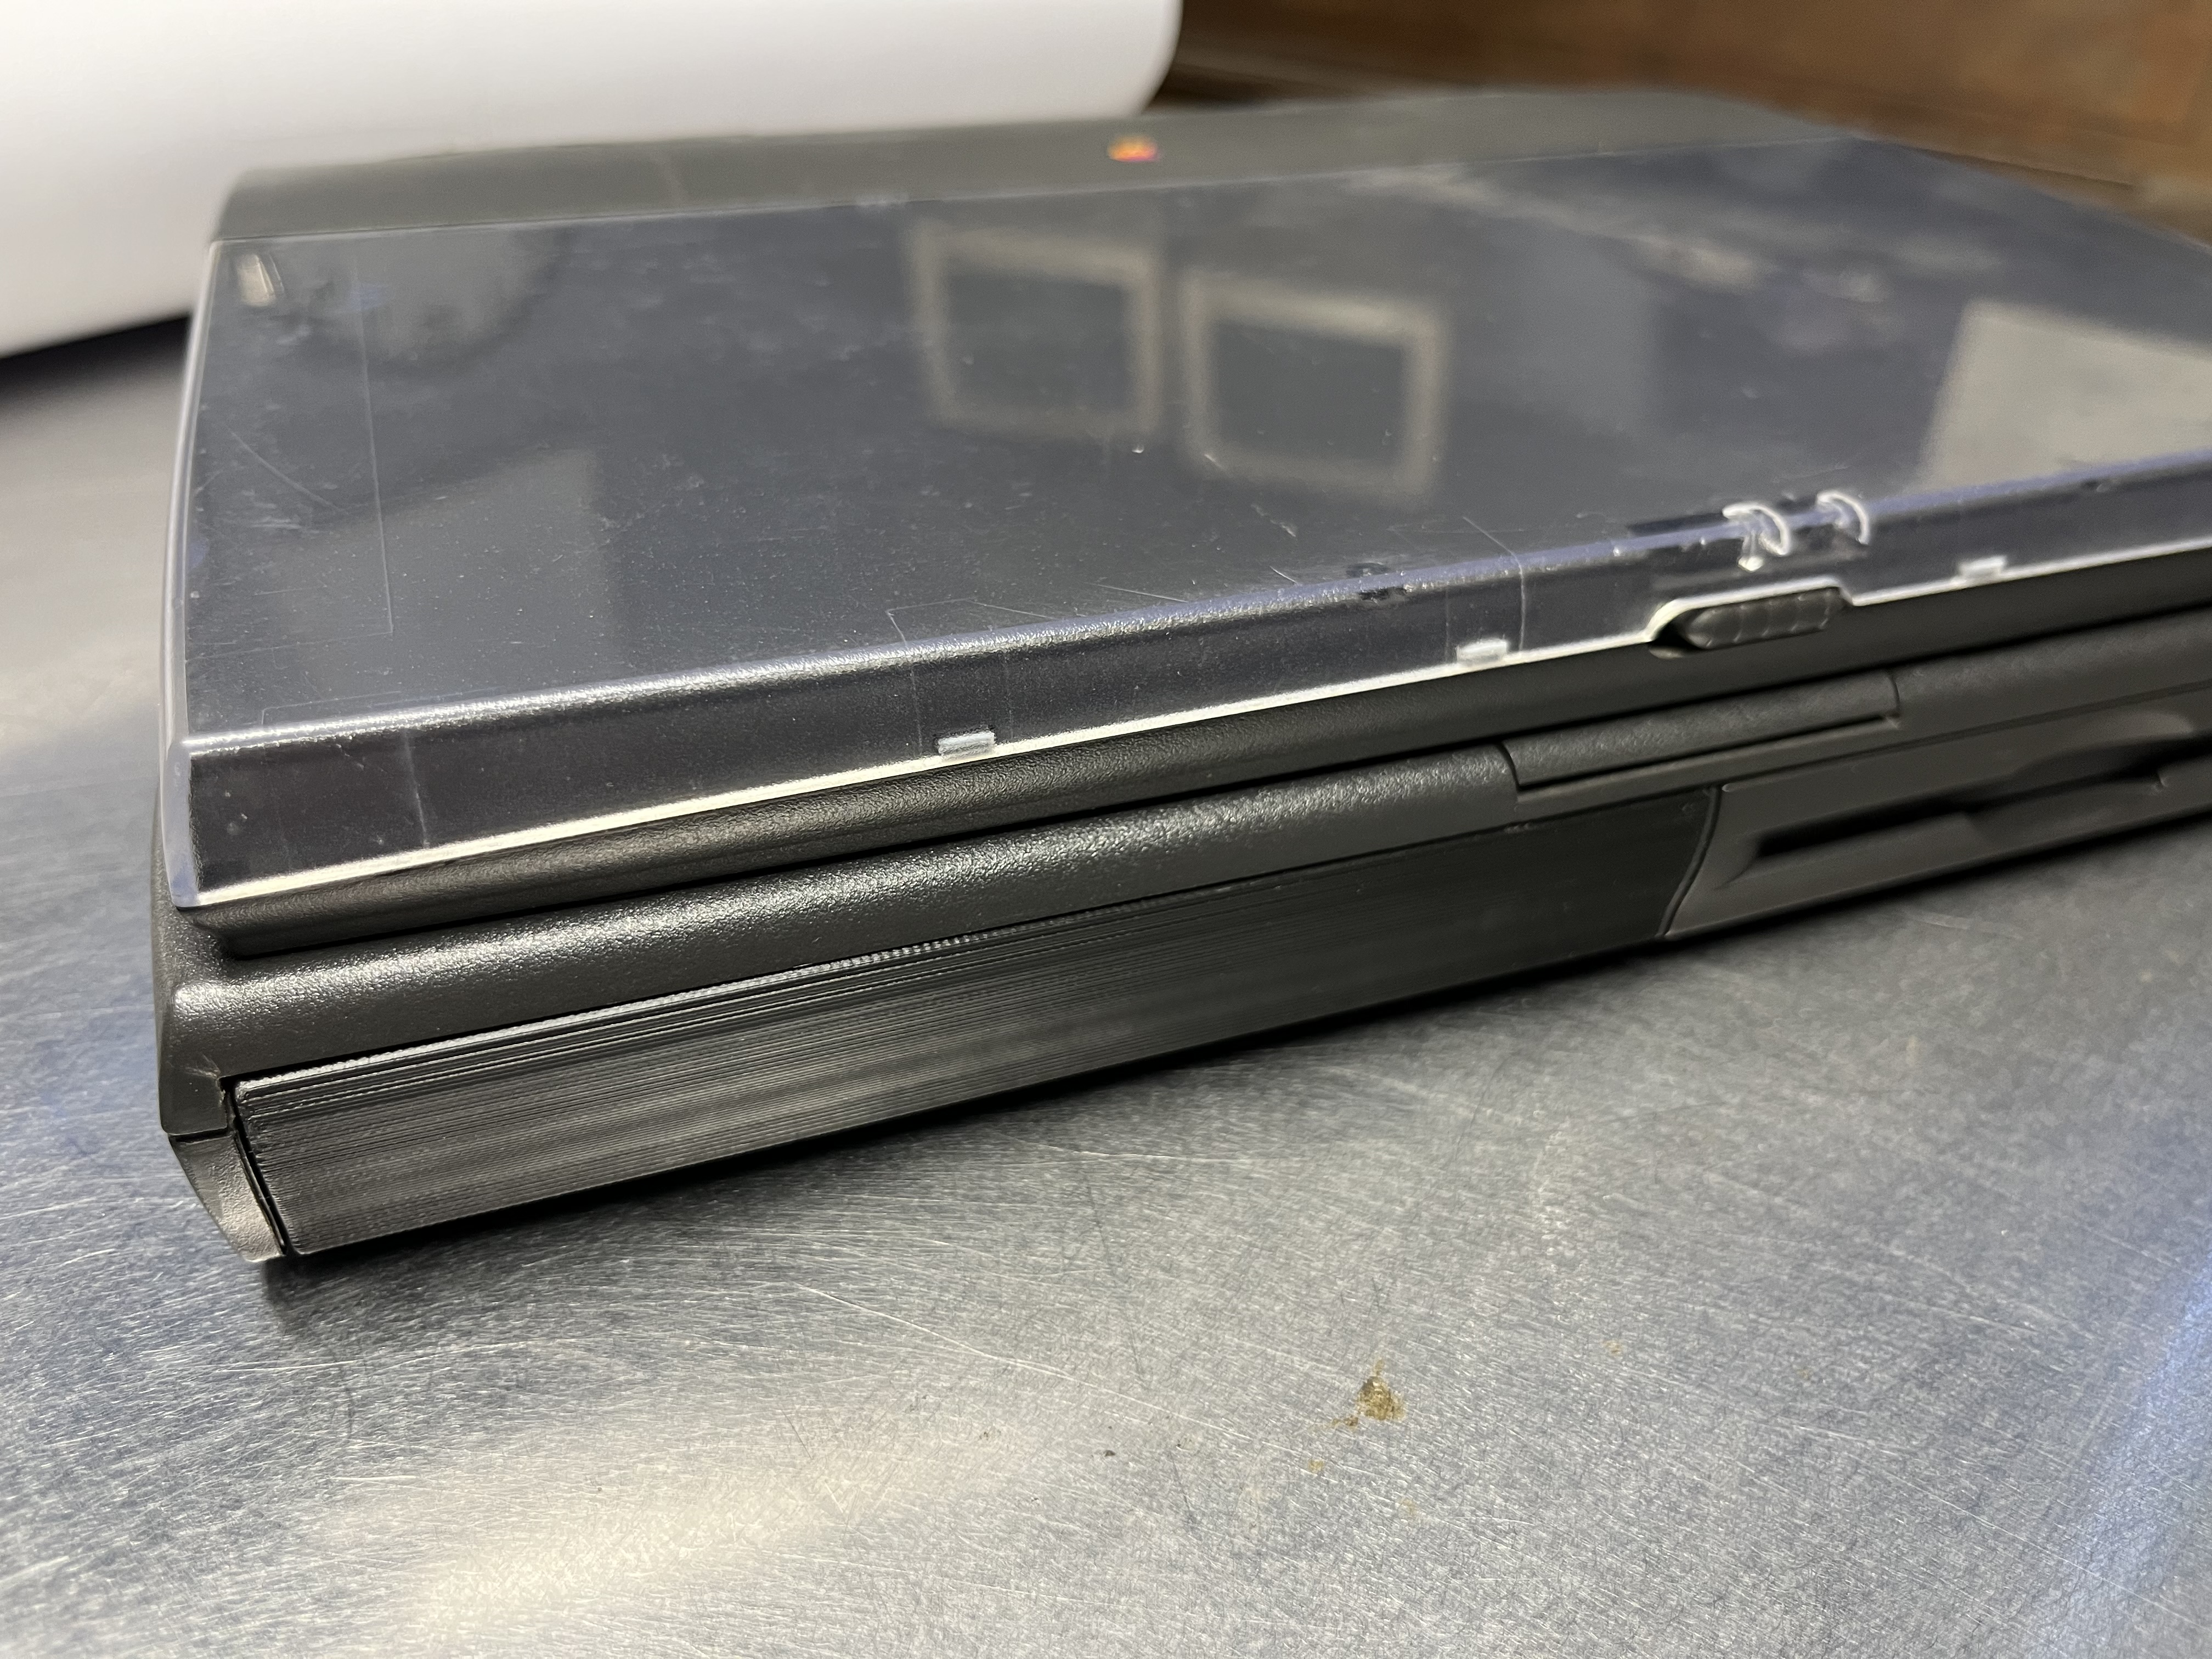 PowerBook 1400 Battery